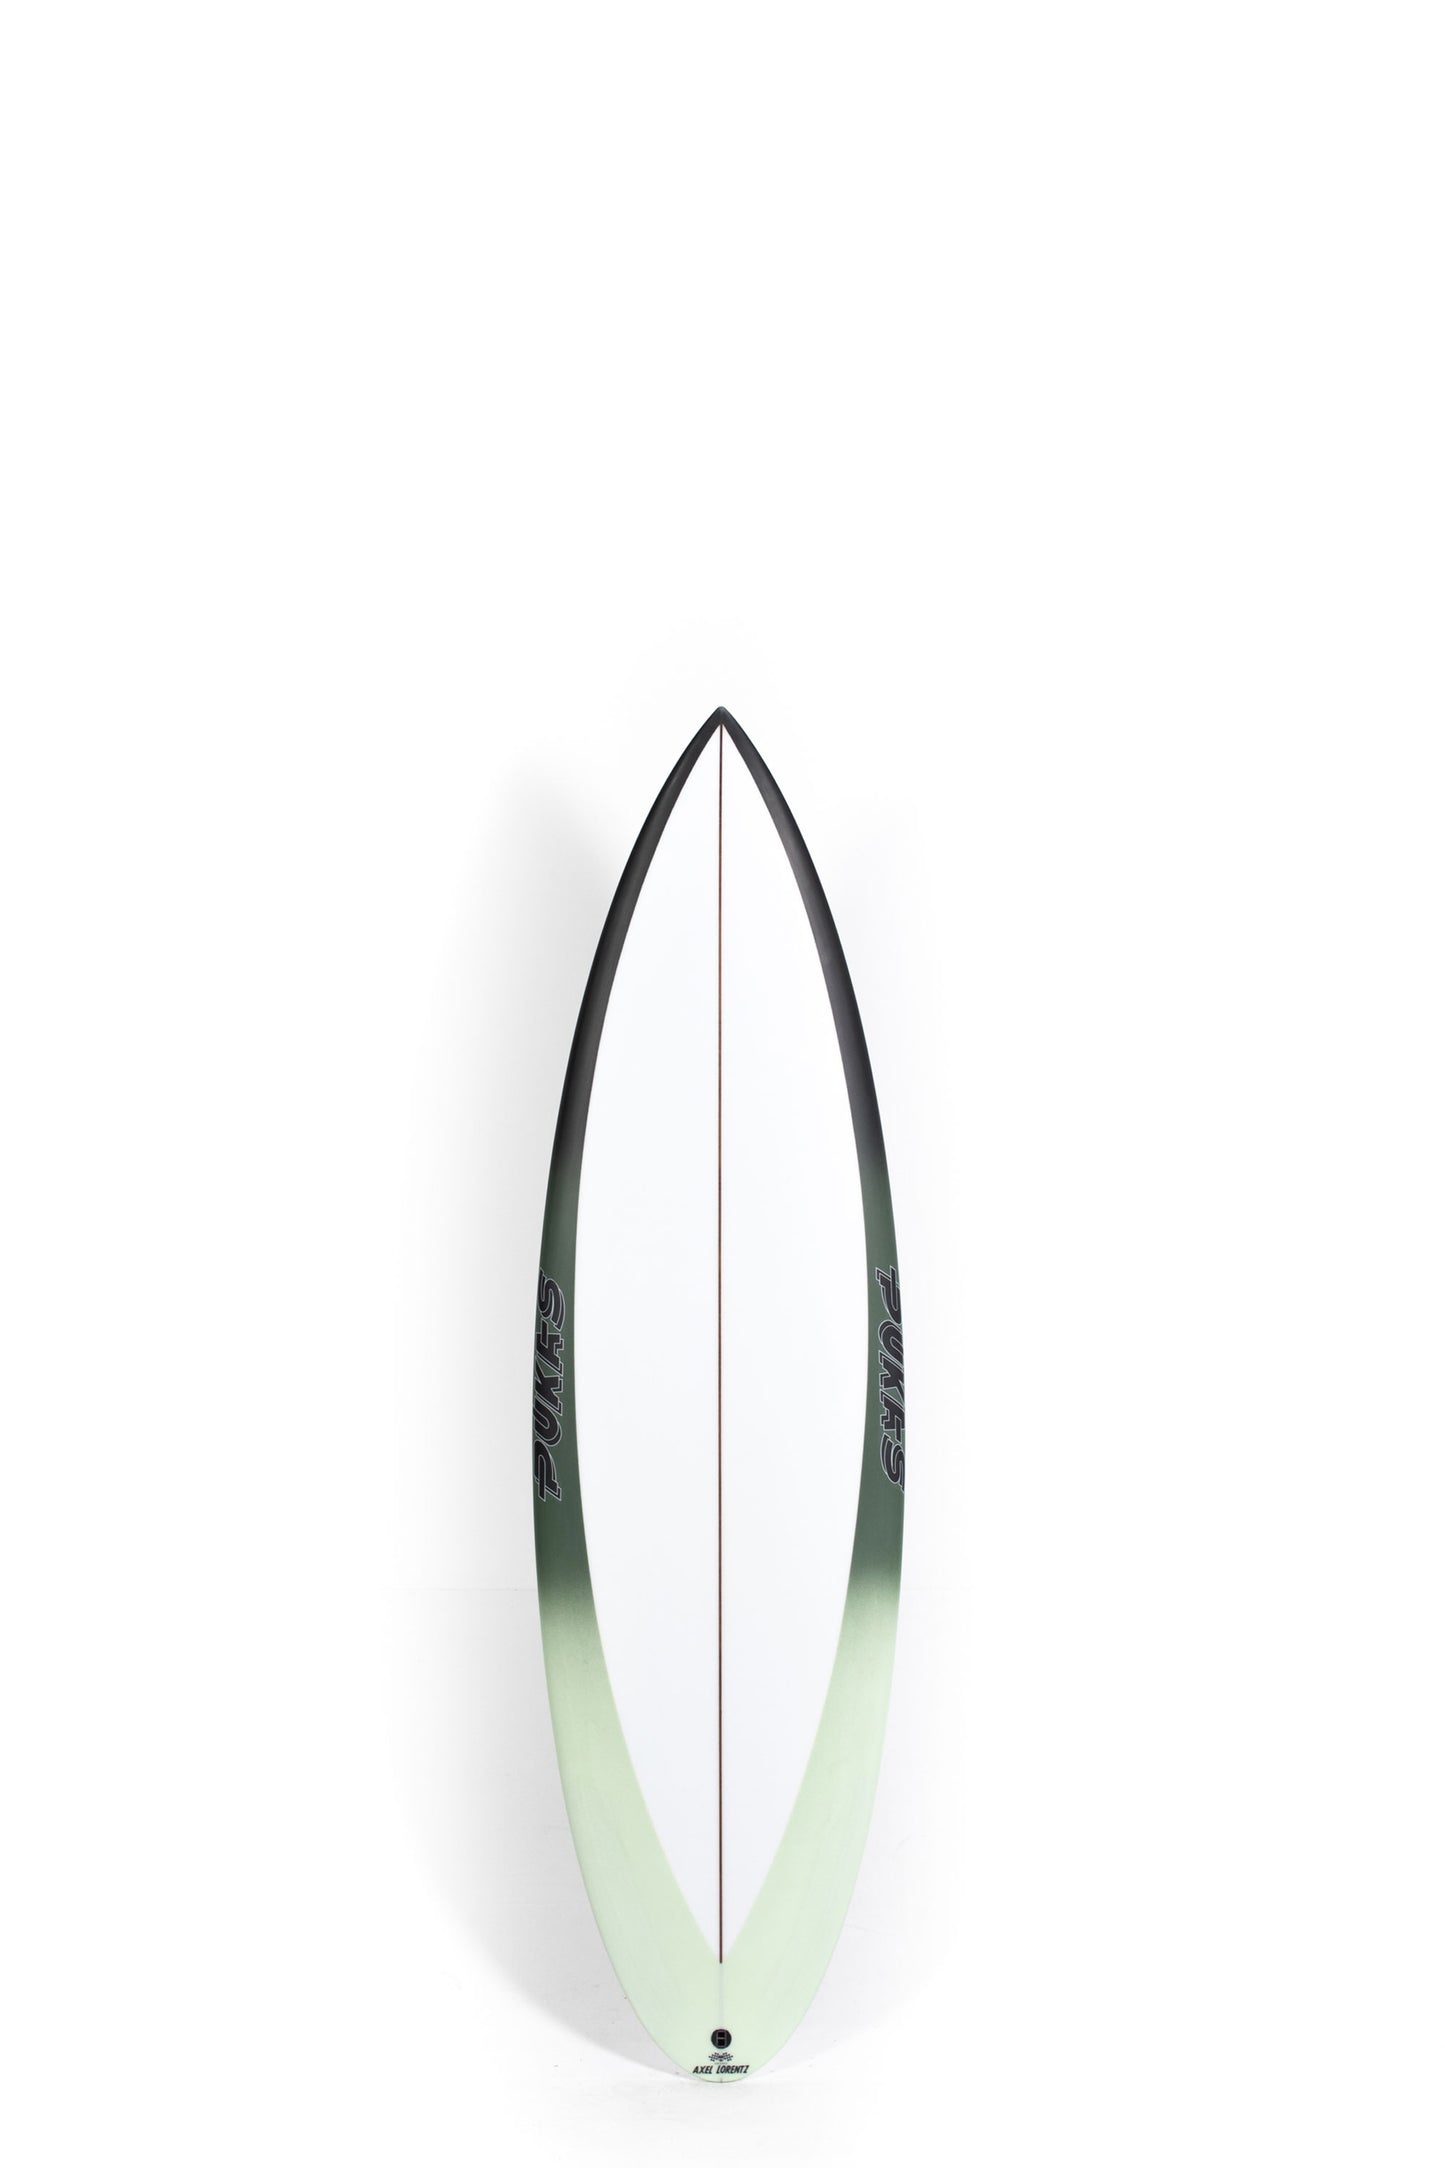 Pukas Surf Shop - Pukas Surfboard - TASTY TREAT ALL ROUND by Axel Lorentz - 5'11" x 19.5 x 2.5 x 30.6L - AX09910